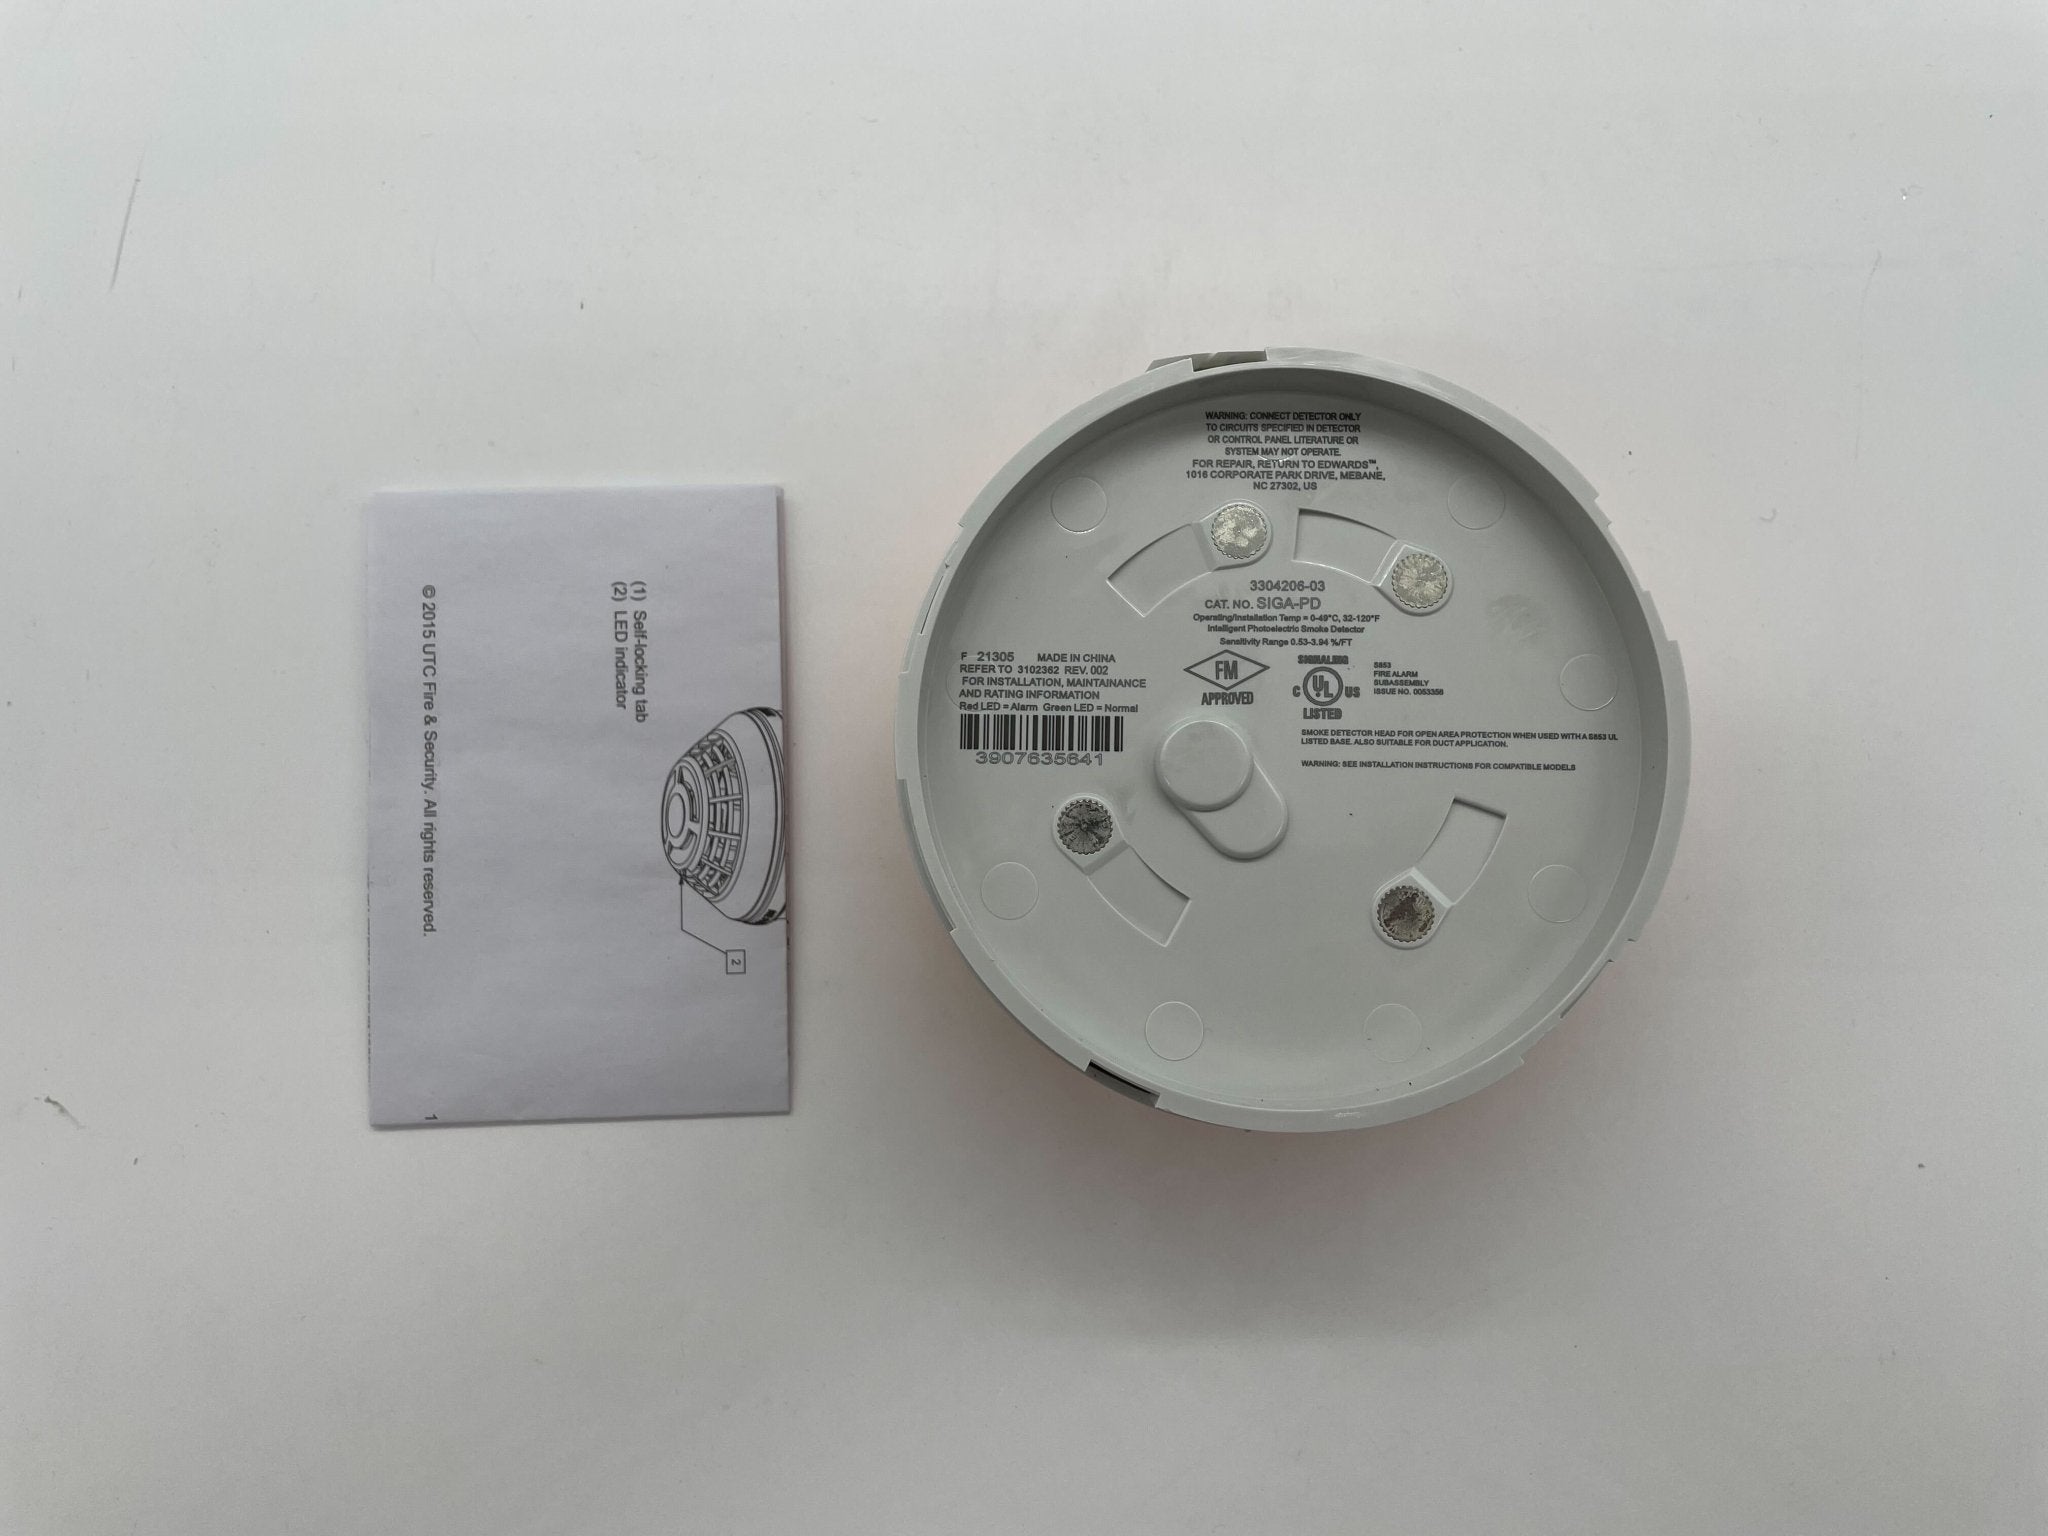 Edwards EST (SIGA-PD) Intelligent Photoelectric Smoke Detector